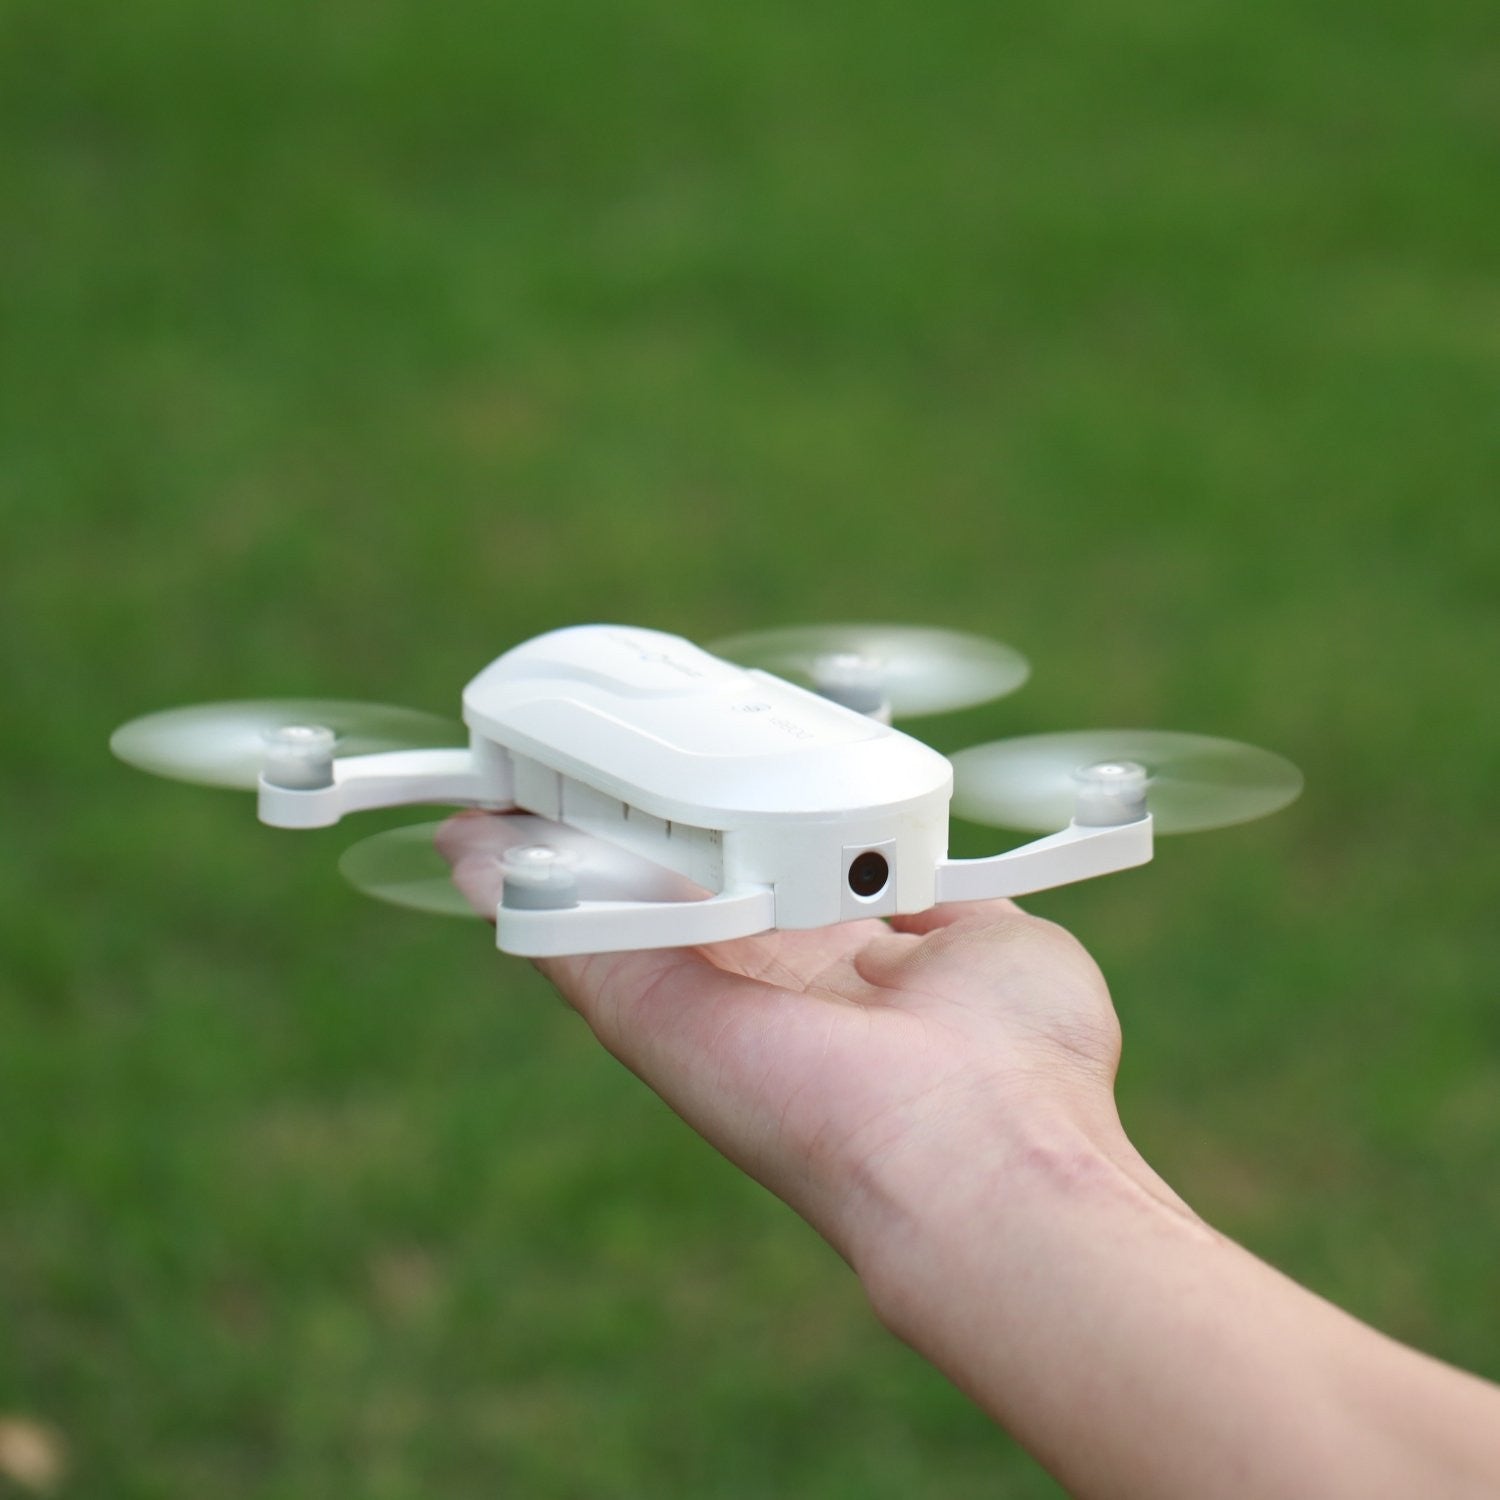 Zerotech Dobby Pocket Selfie Drone | AimToFind.com